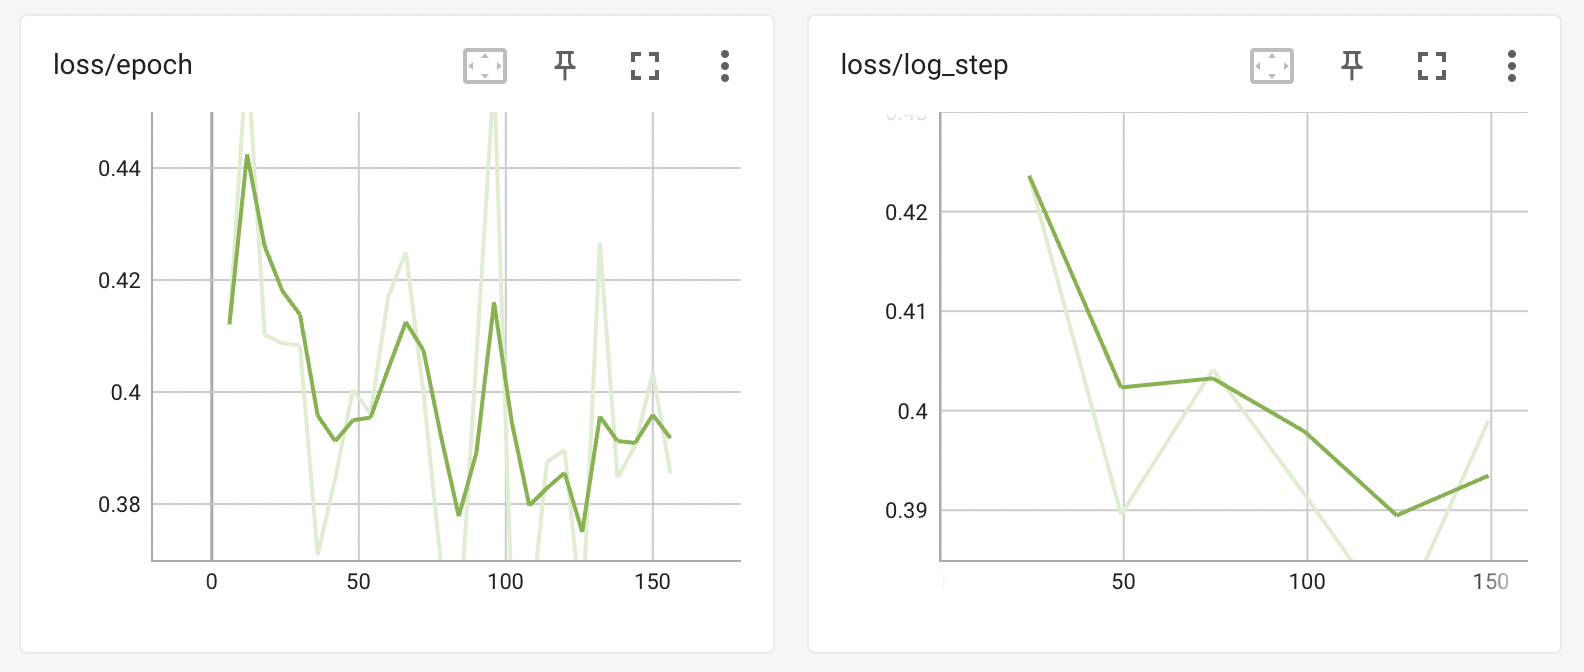 two noisy loss graphs